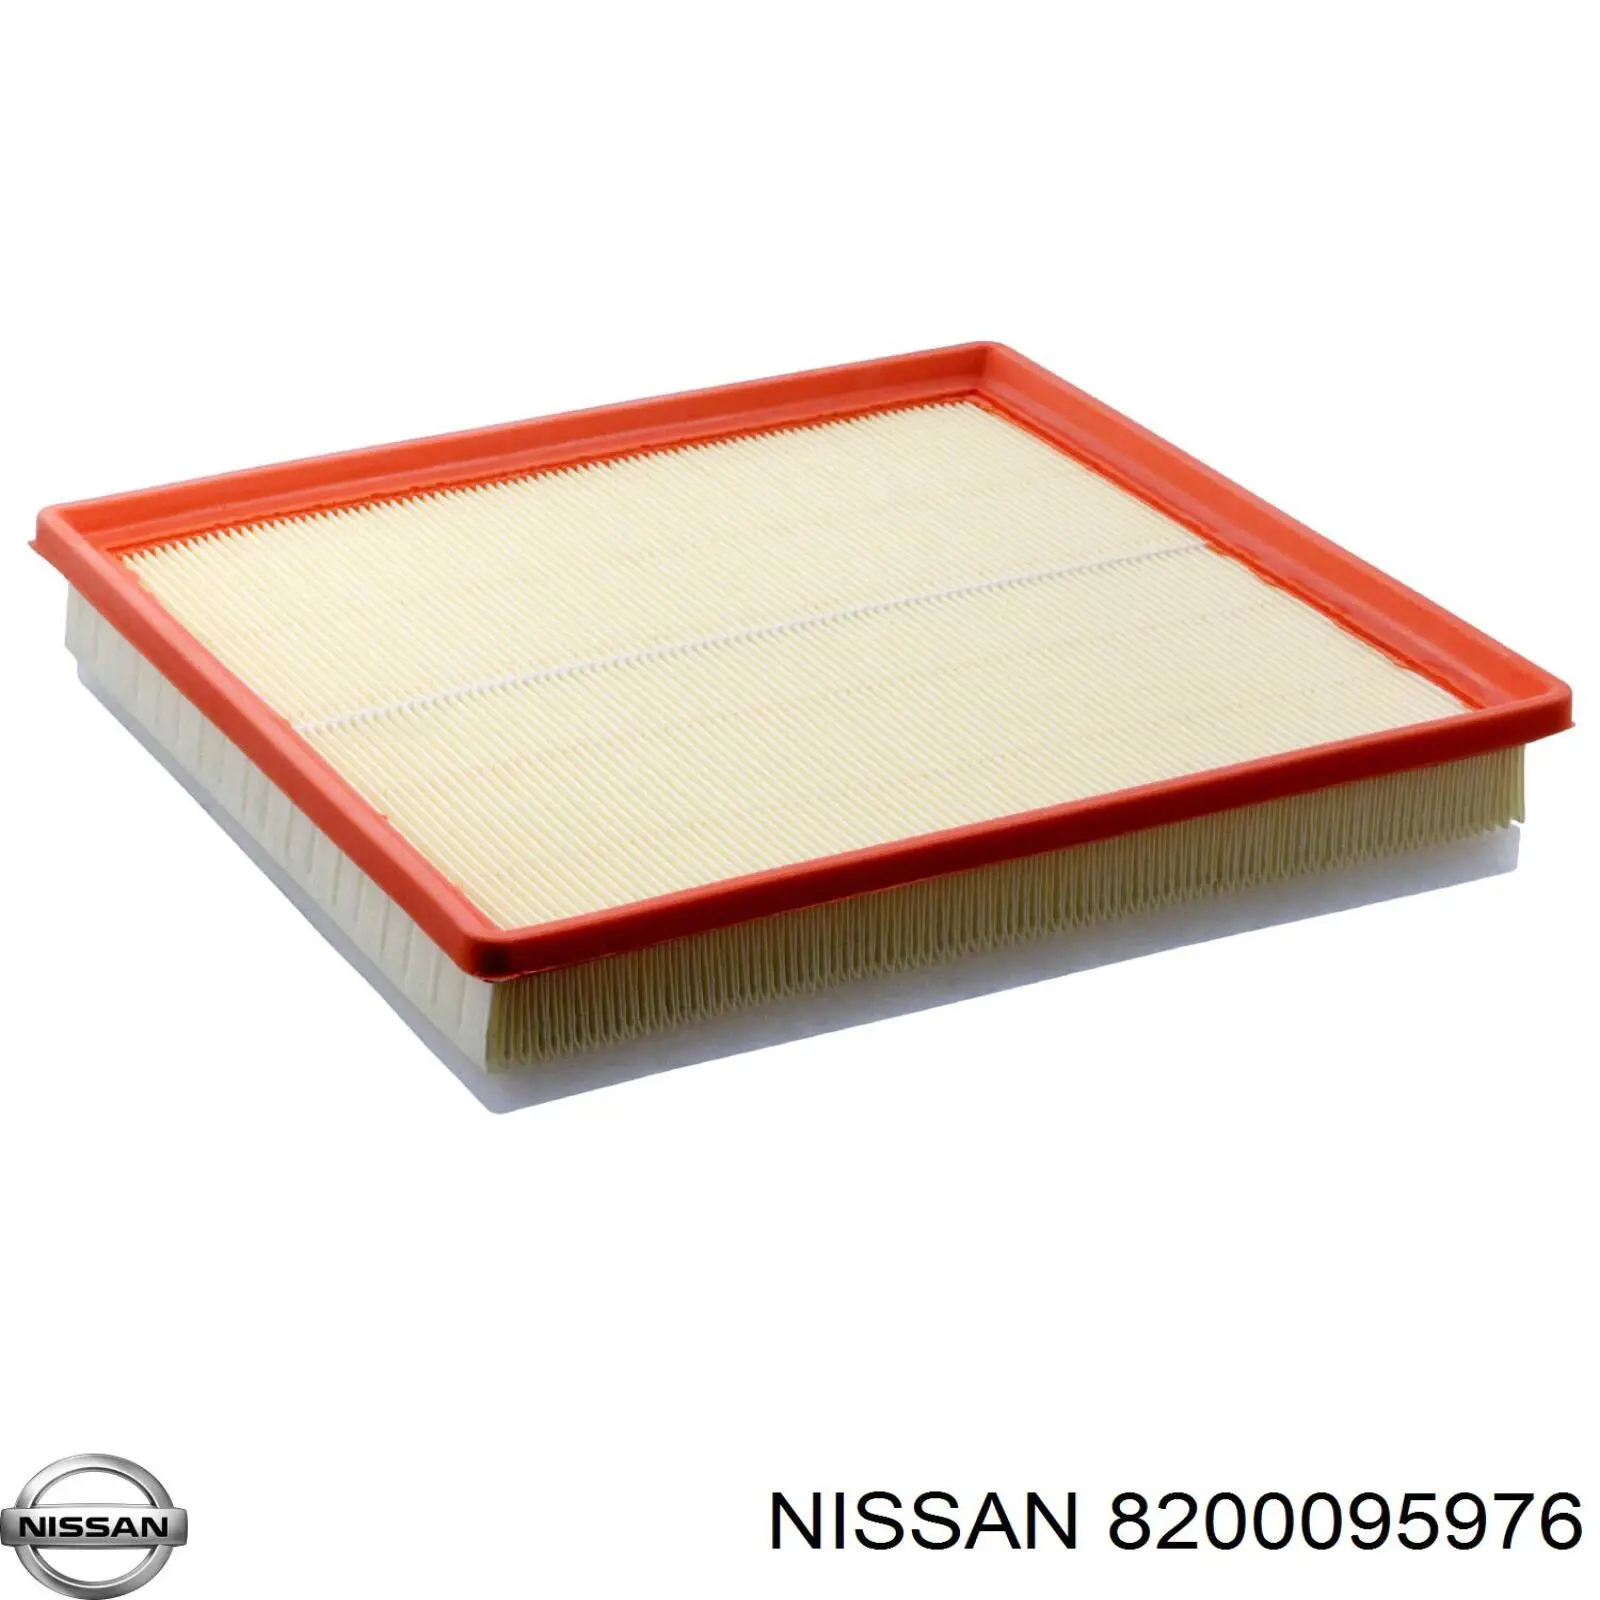 8200095976 Nissan filtro de aire